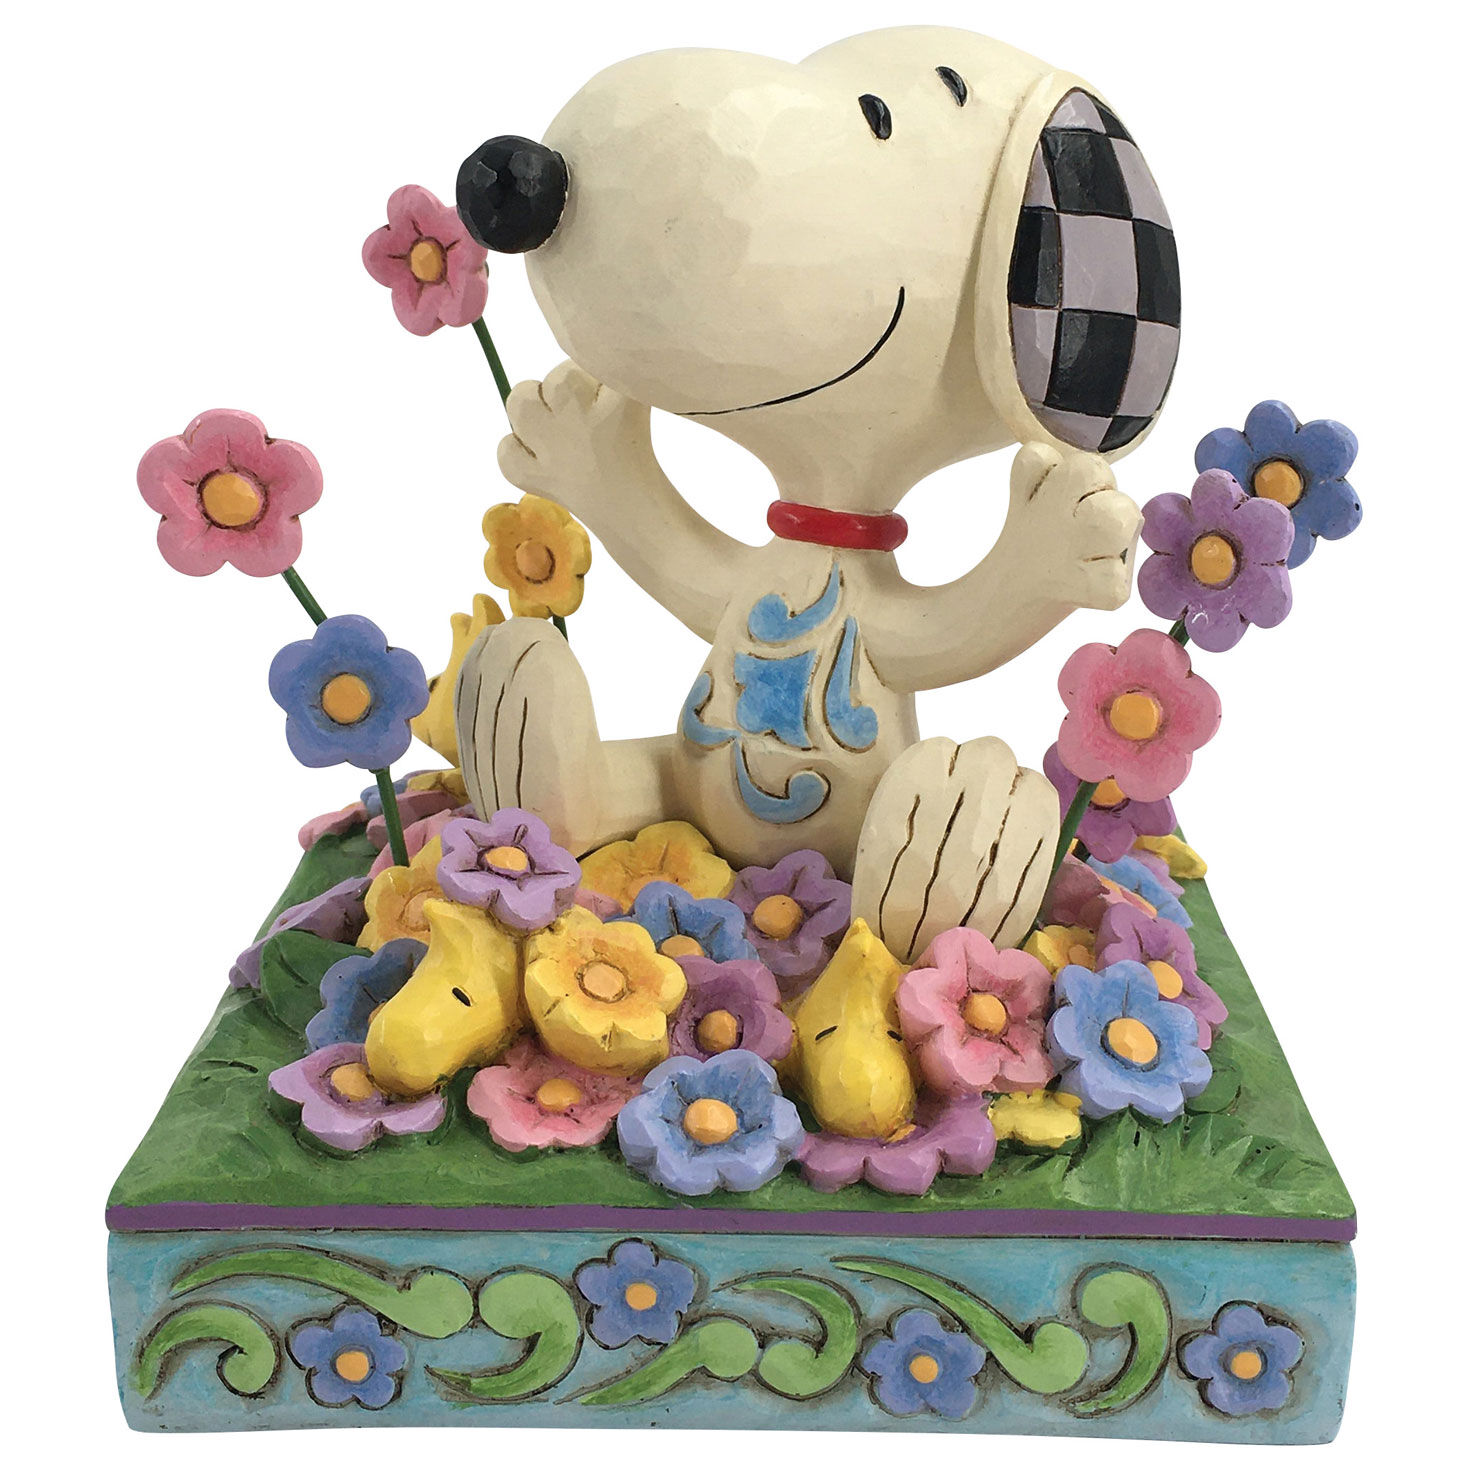 Jim Shore Peanuts Snoopy in Flowers Figurine, 4.75